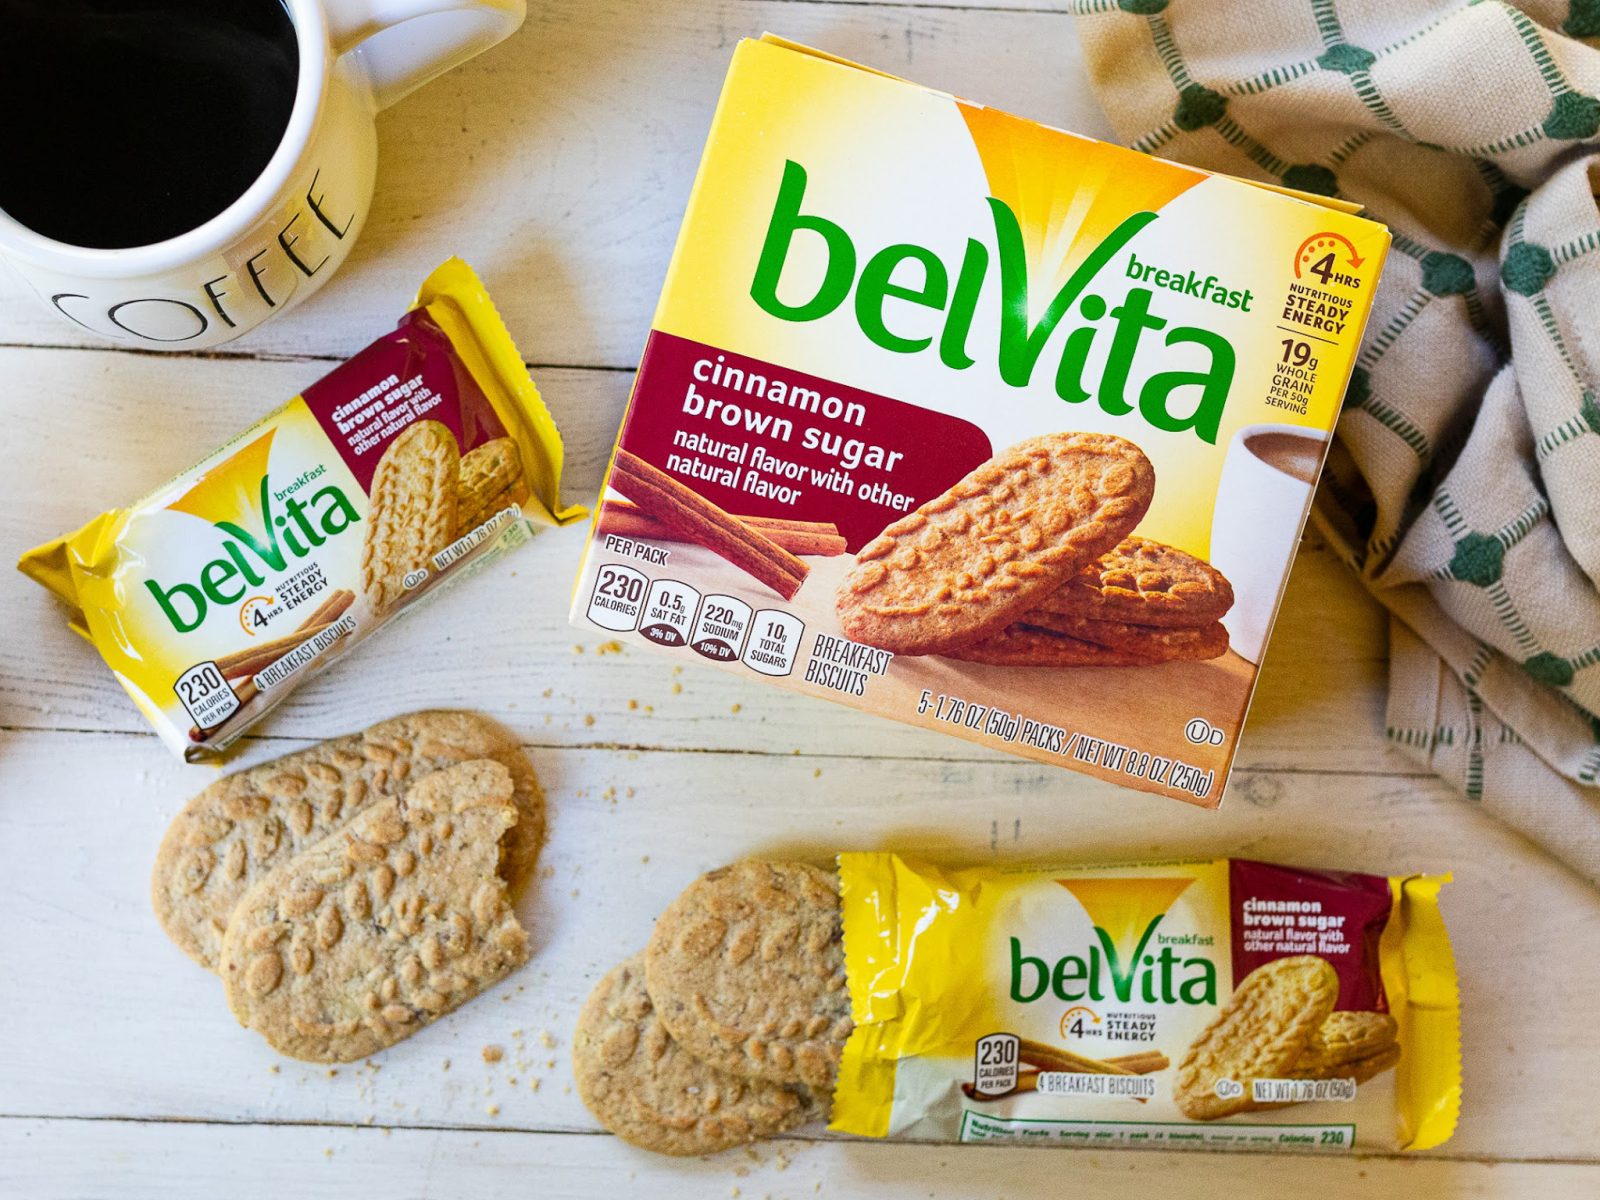 Nice Discount On Nabisco belVita Breakfast Biscuits At Kroger – As Low As $2.24 Per Box